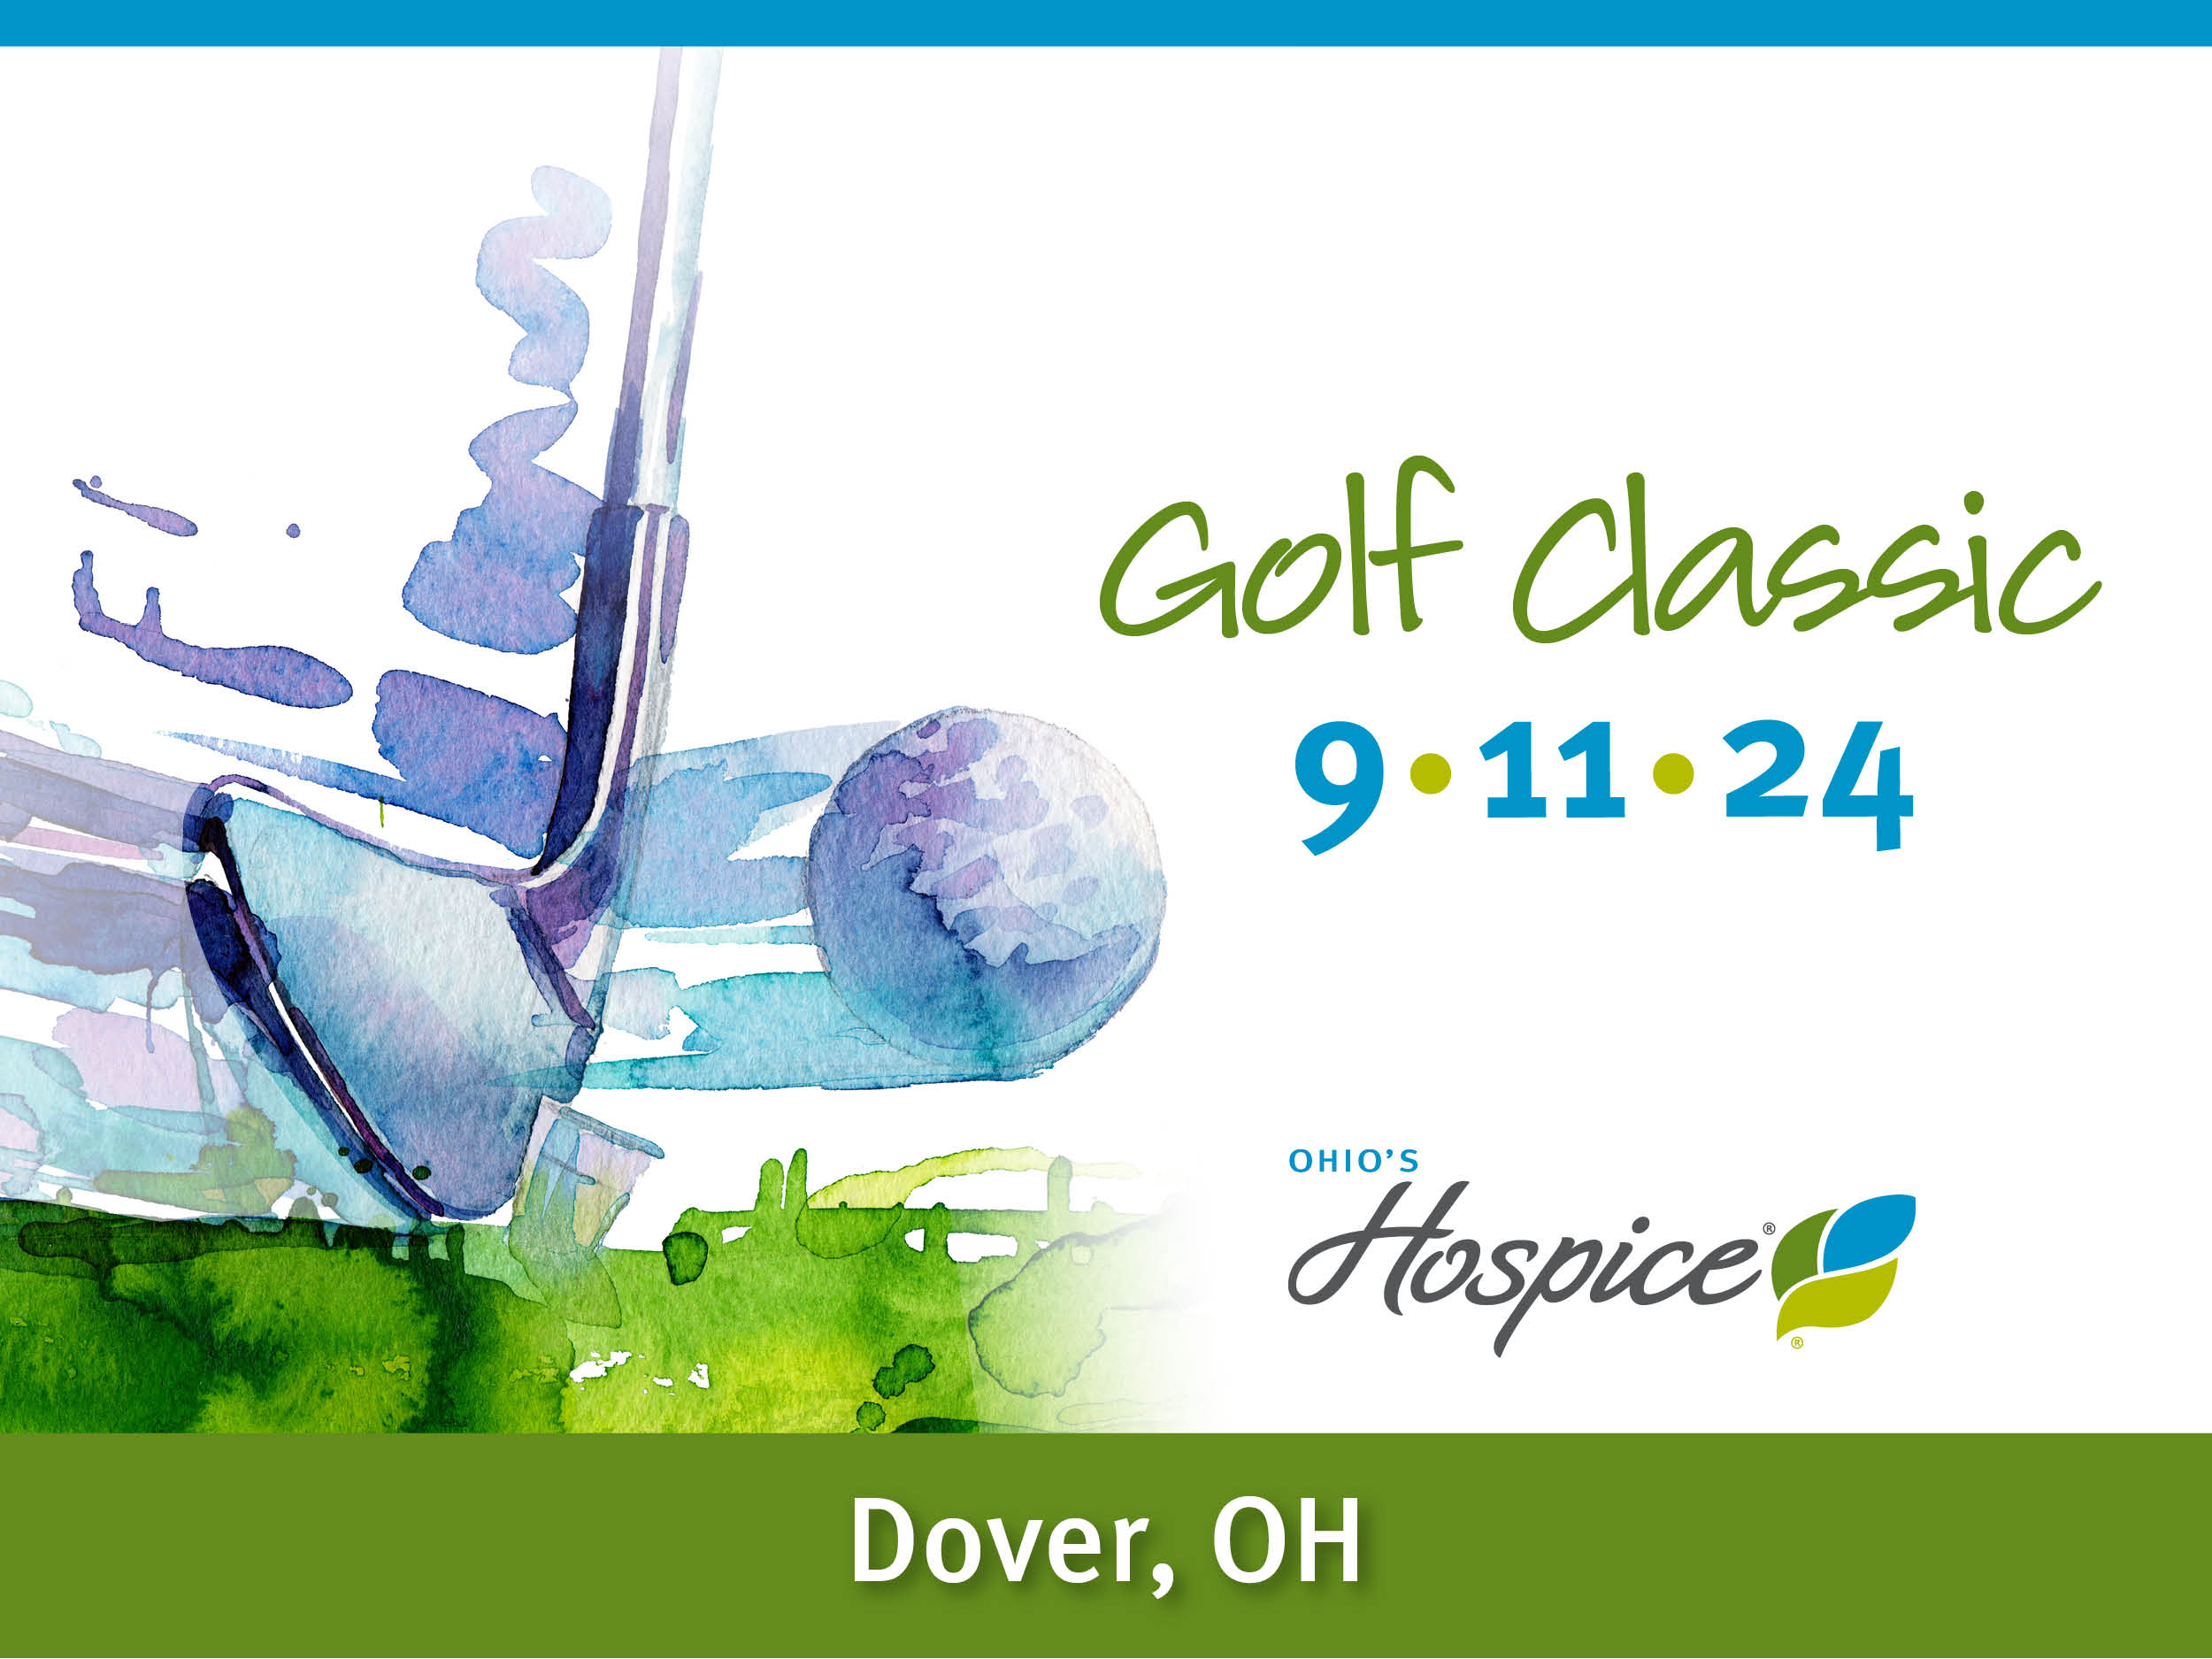 Golf Classic 9.11.24 Dover, OH Ohio's Hospice